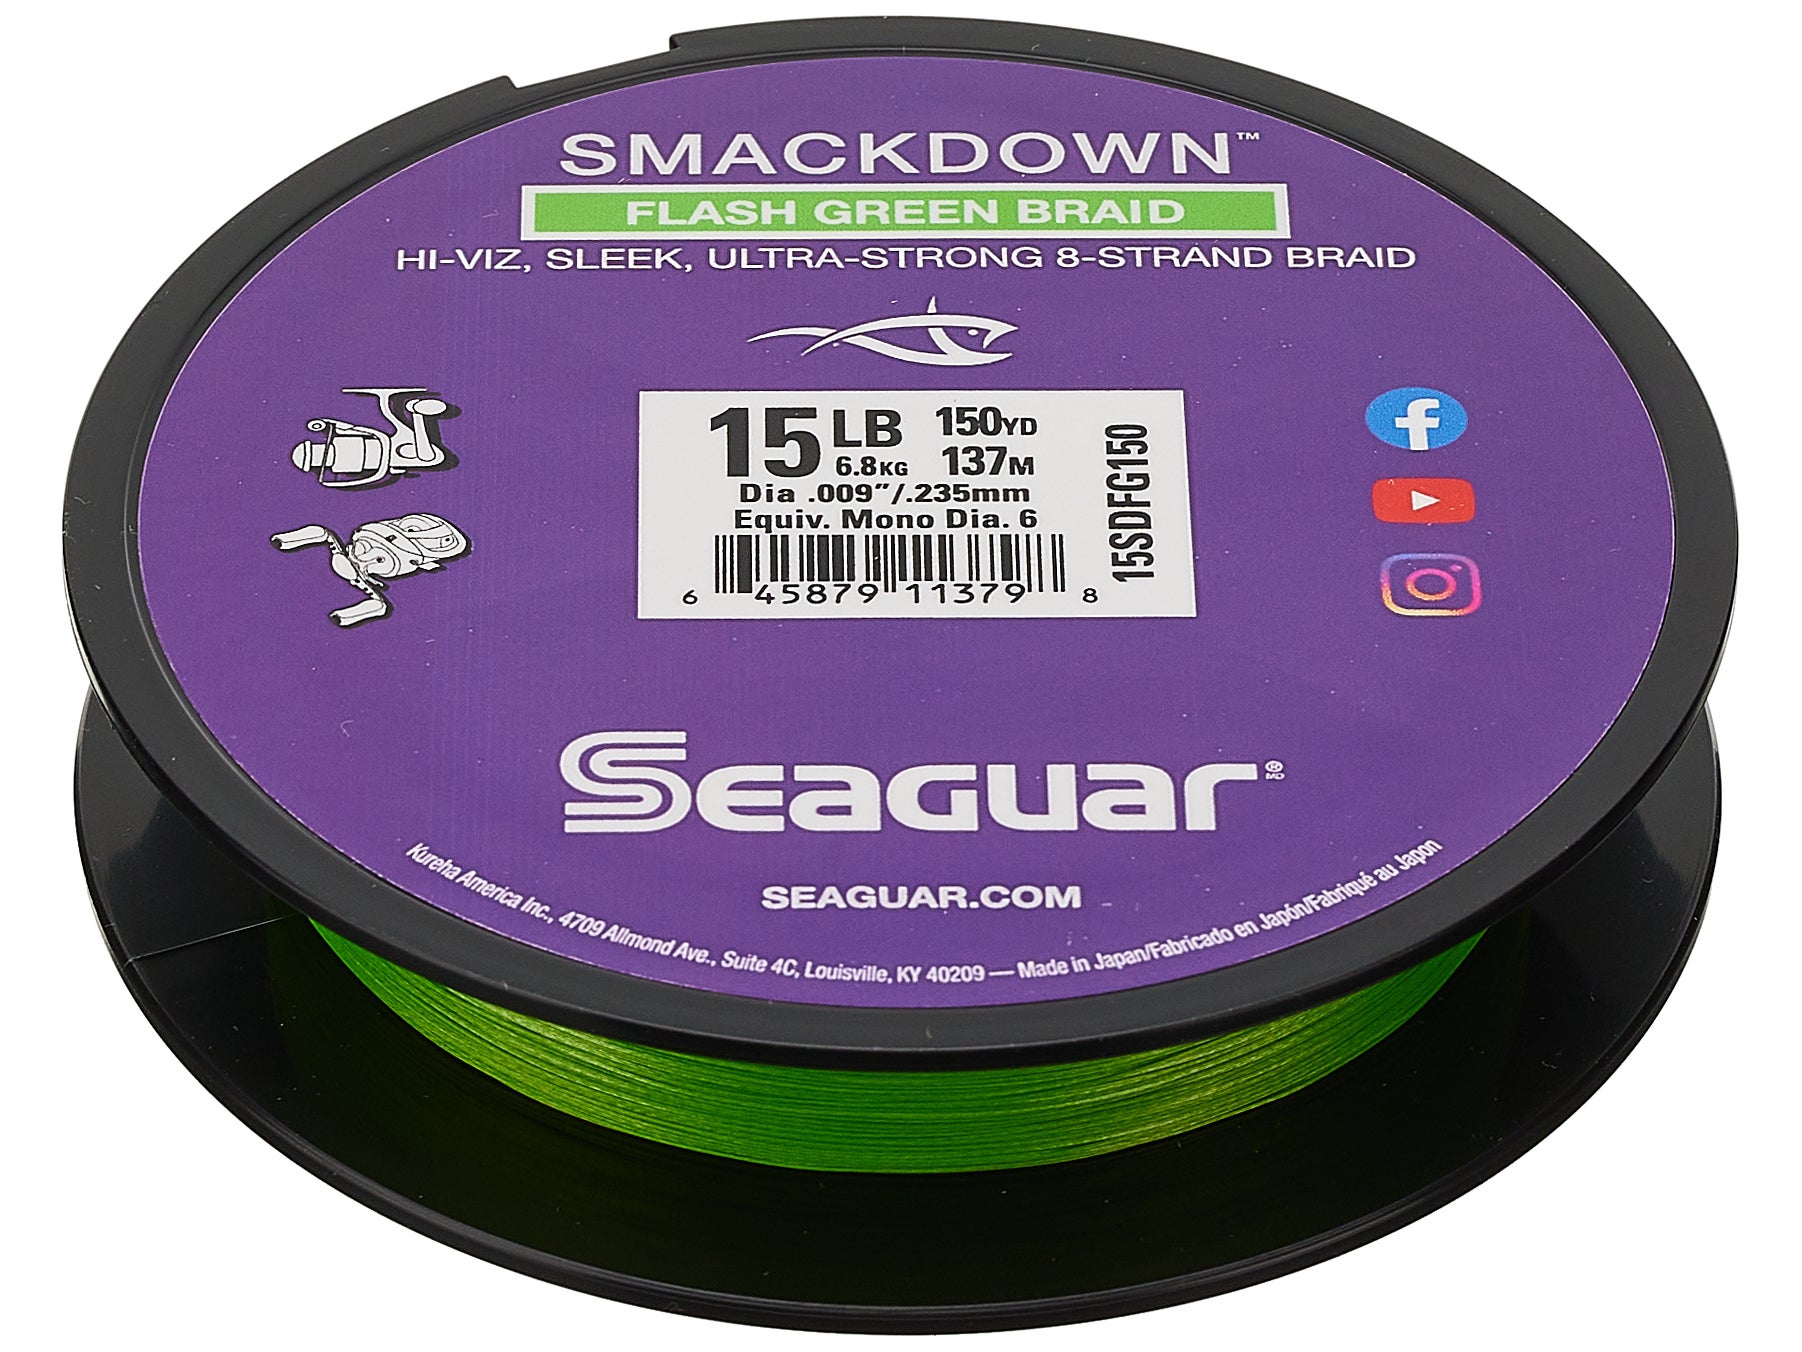 Seaguar Smackdown Flash Green 30SDFG150 8 Strand Braid 30SDFG150 